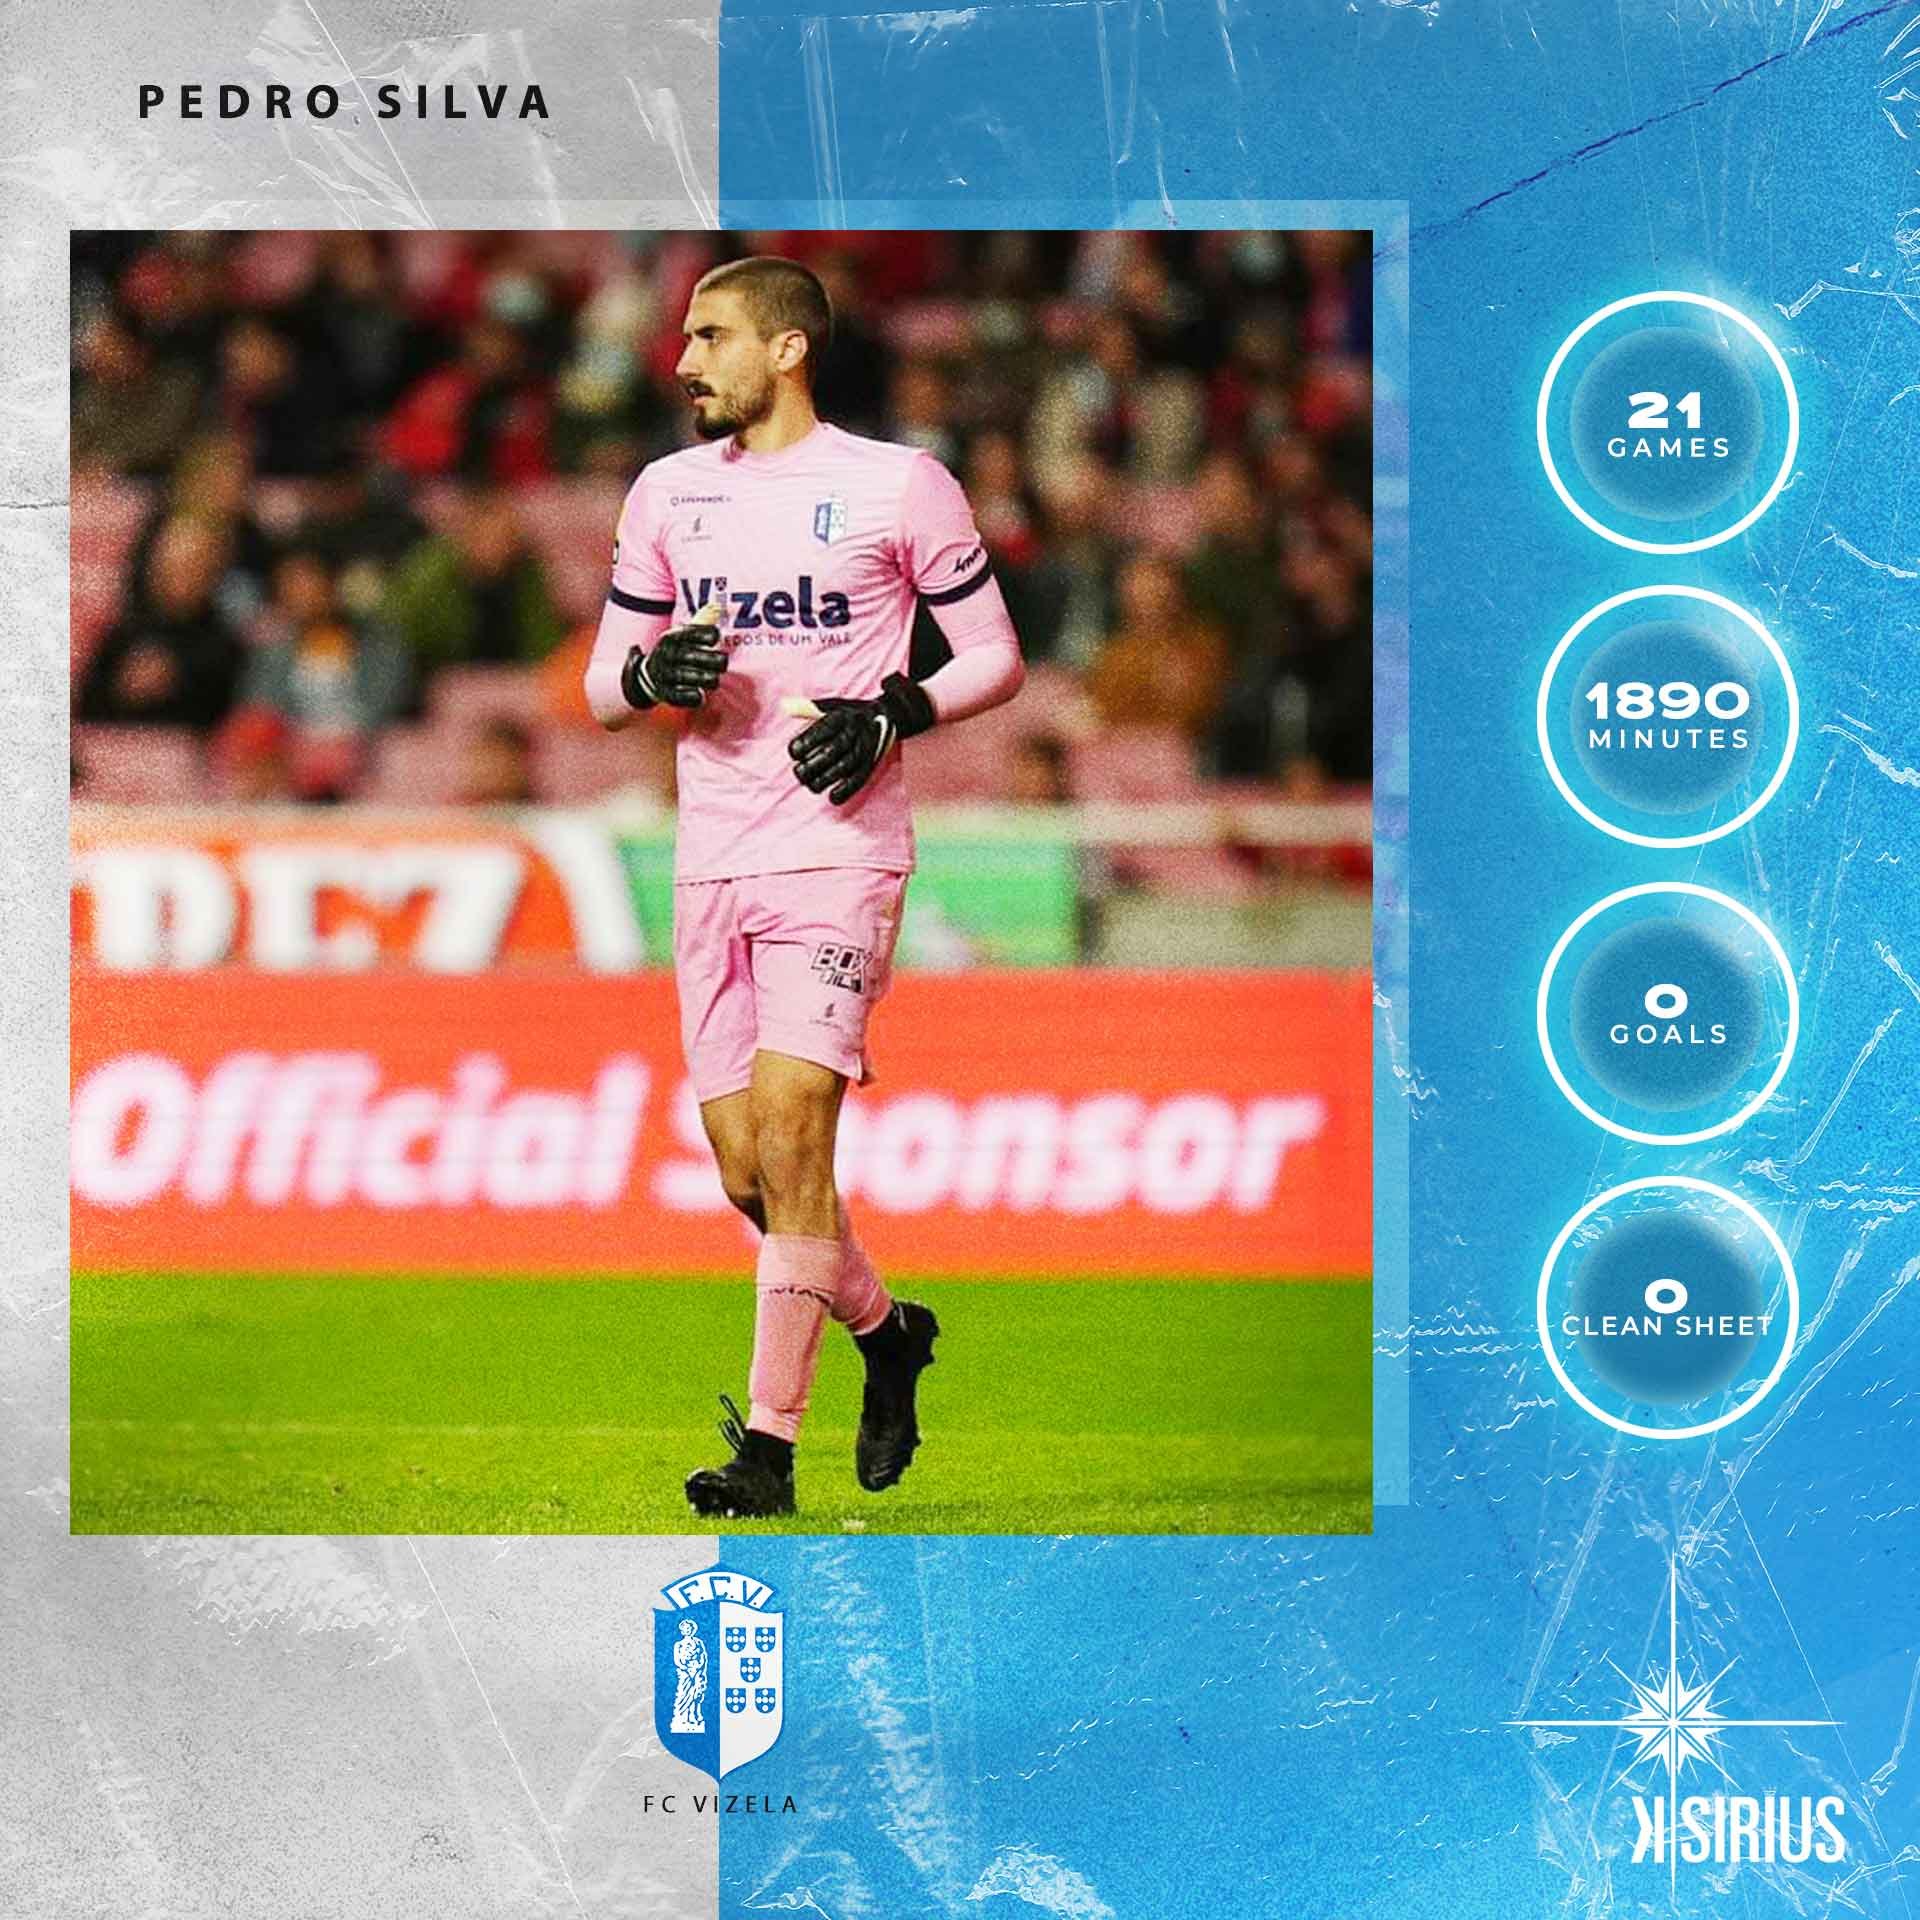 Stats: Pedro Silva (FC Vizela)